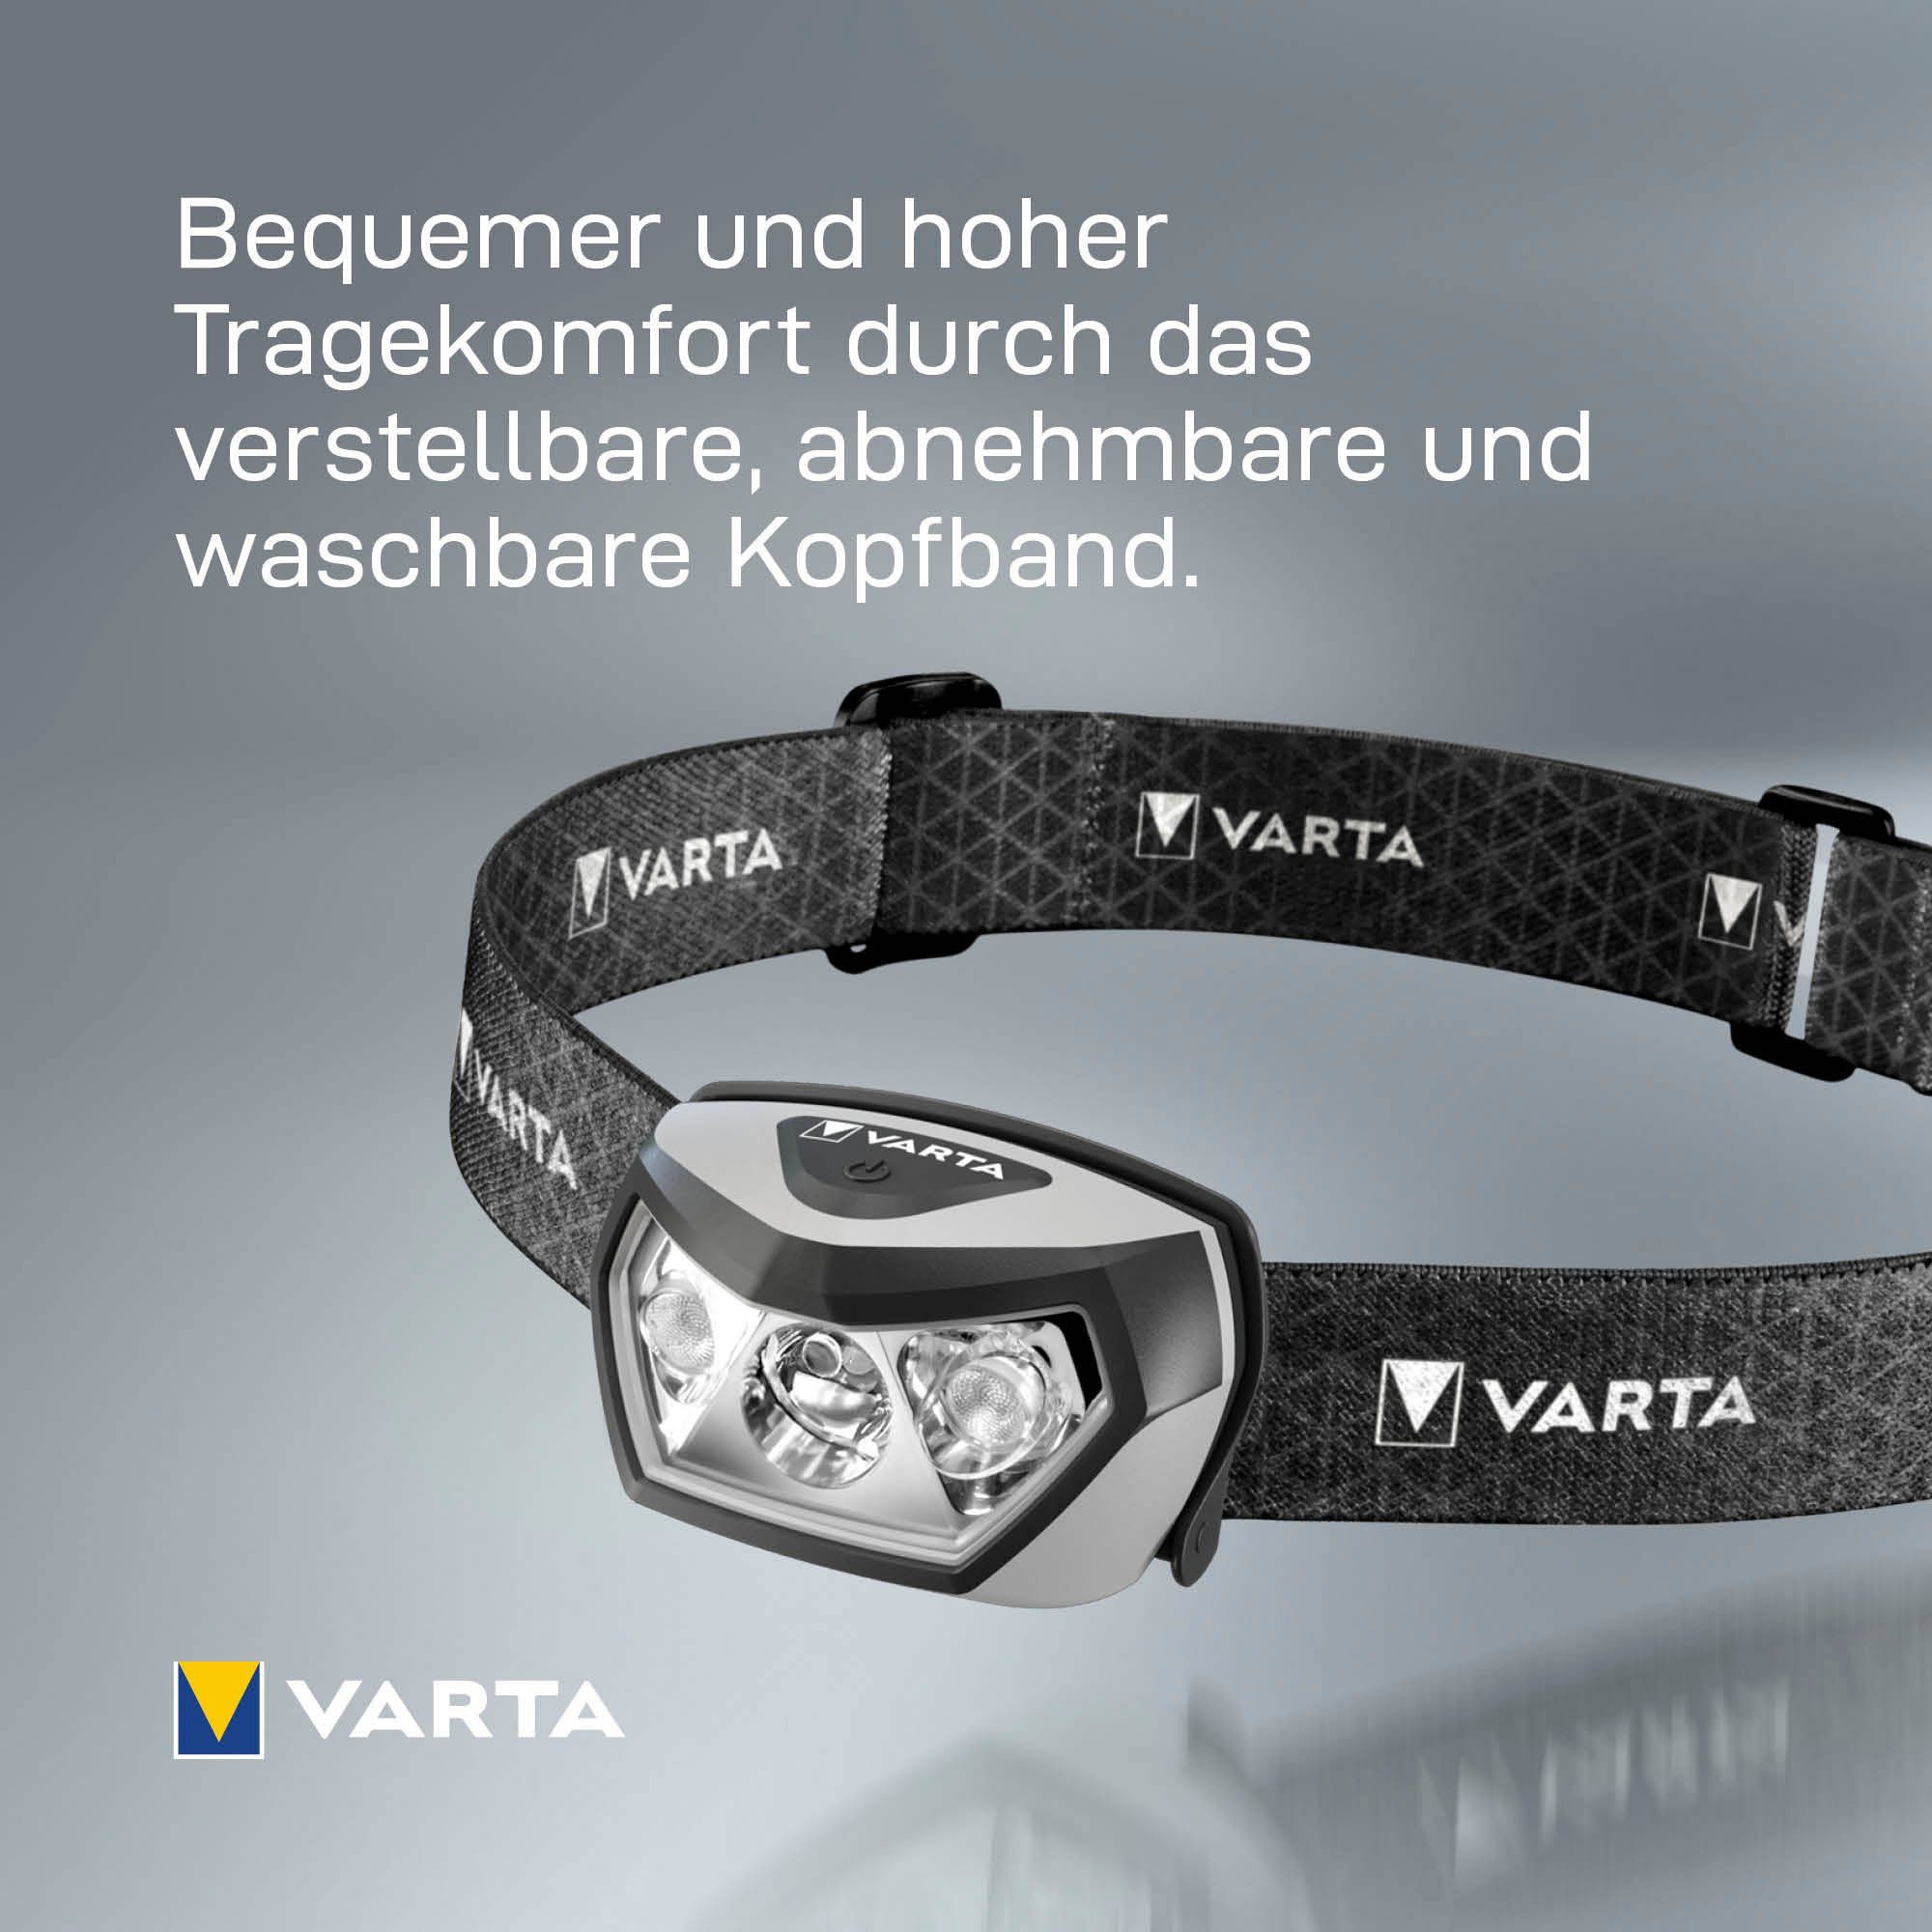 Pro H30R VARTA Kopflampe mit Sports Akku Wireless Outdoor